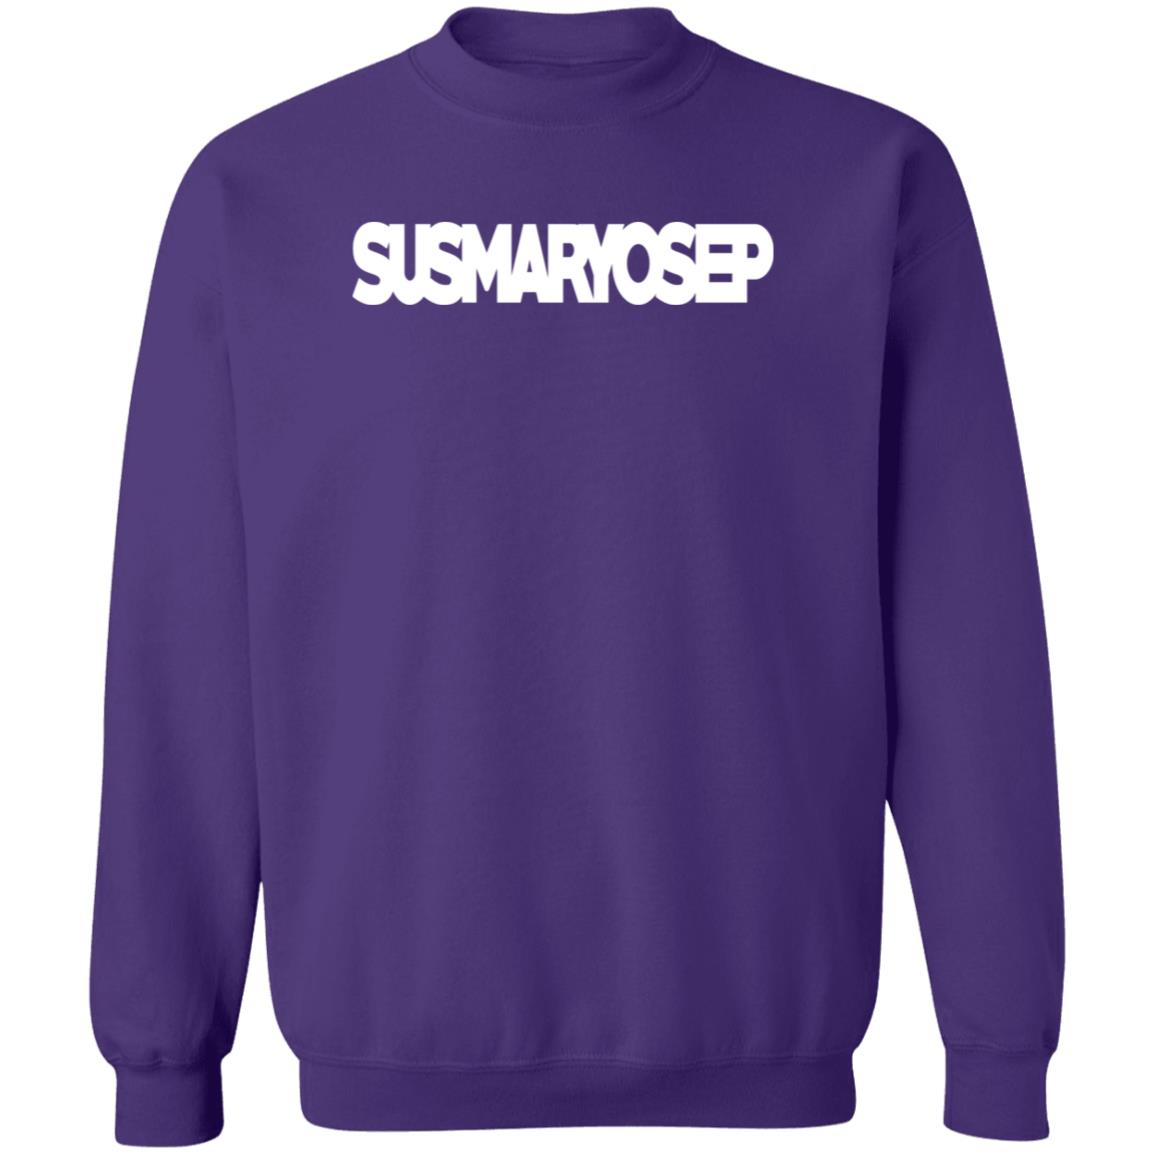 Susmaryosep Mash Unisex Crewneck Pullover Sweatshirt